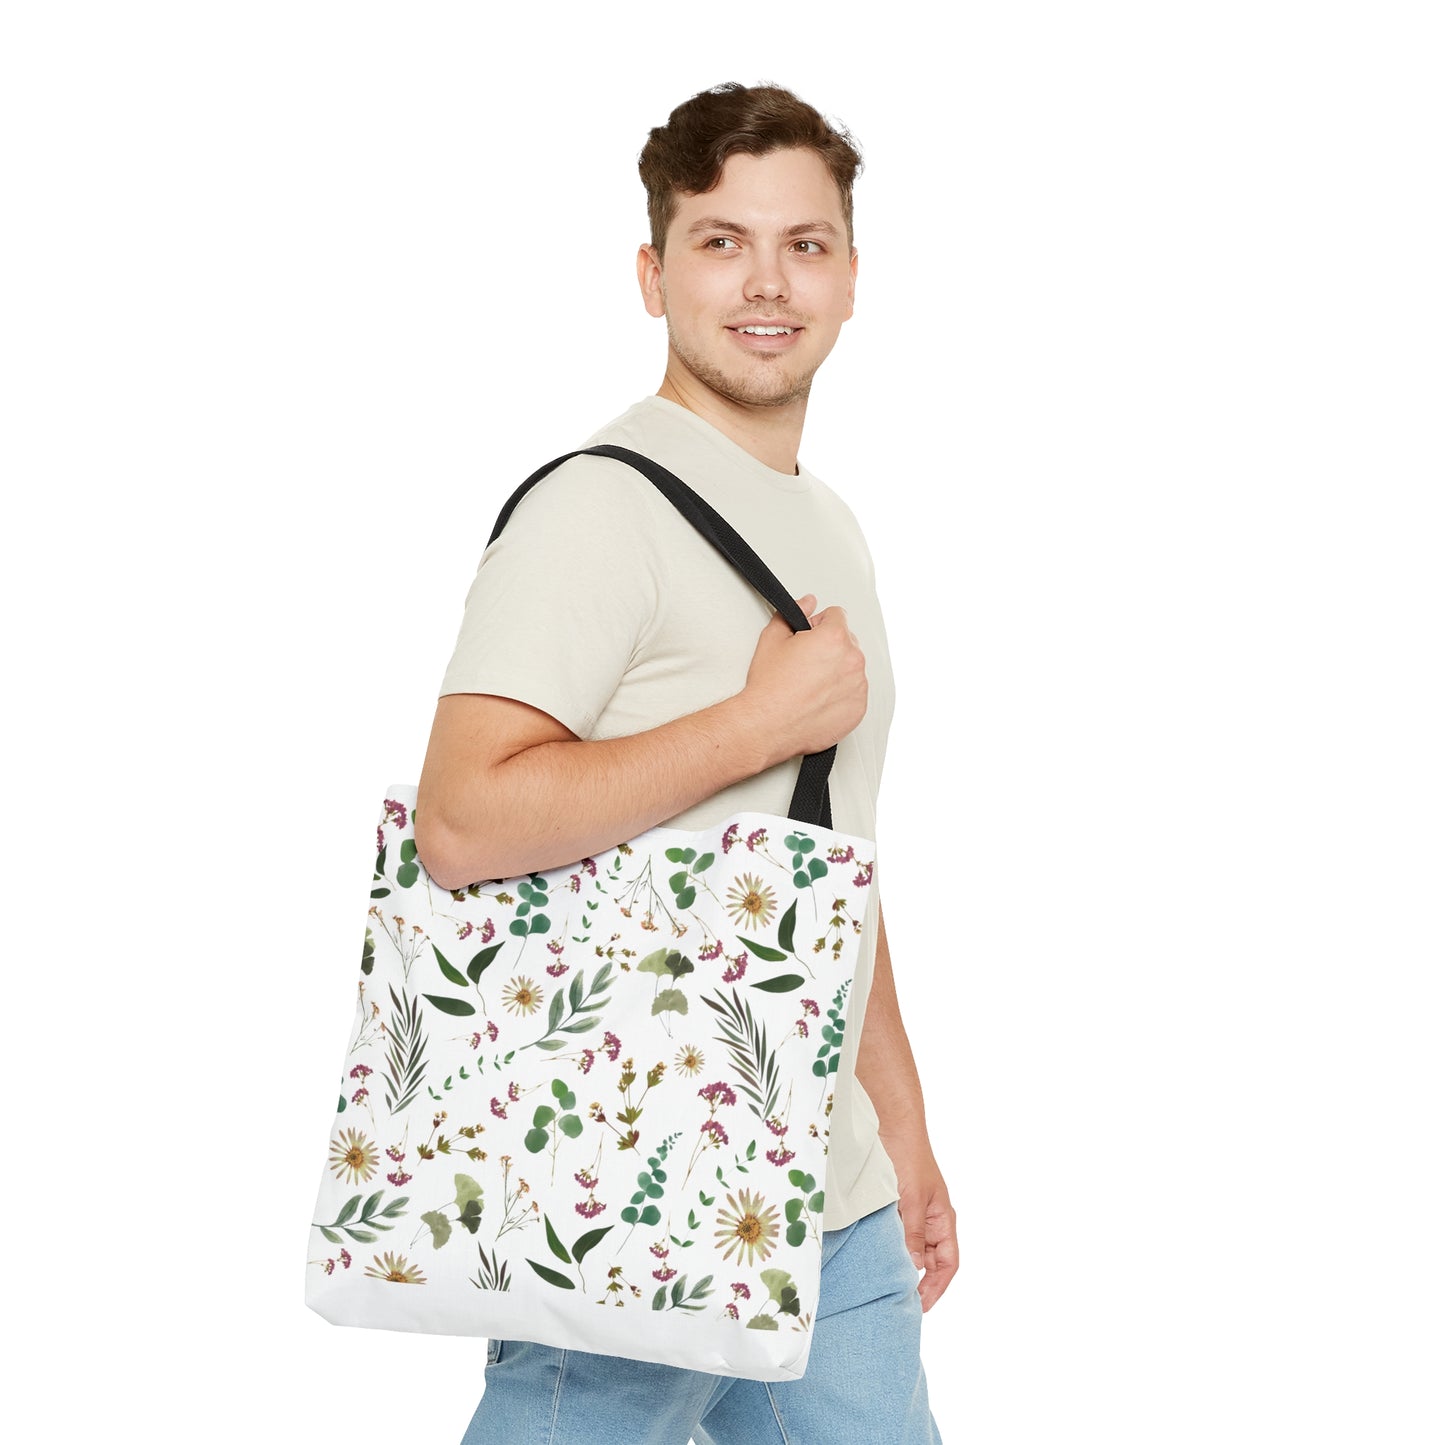 Flower and Leaf Pattern Tote Bag